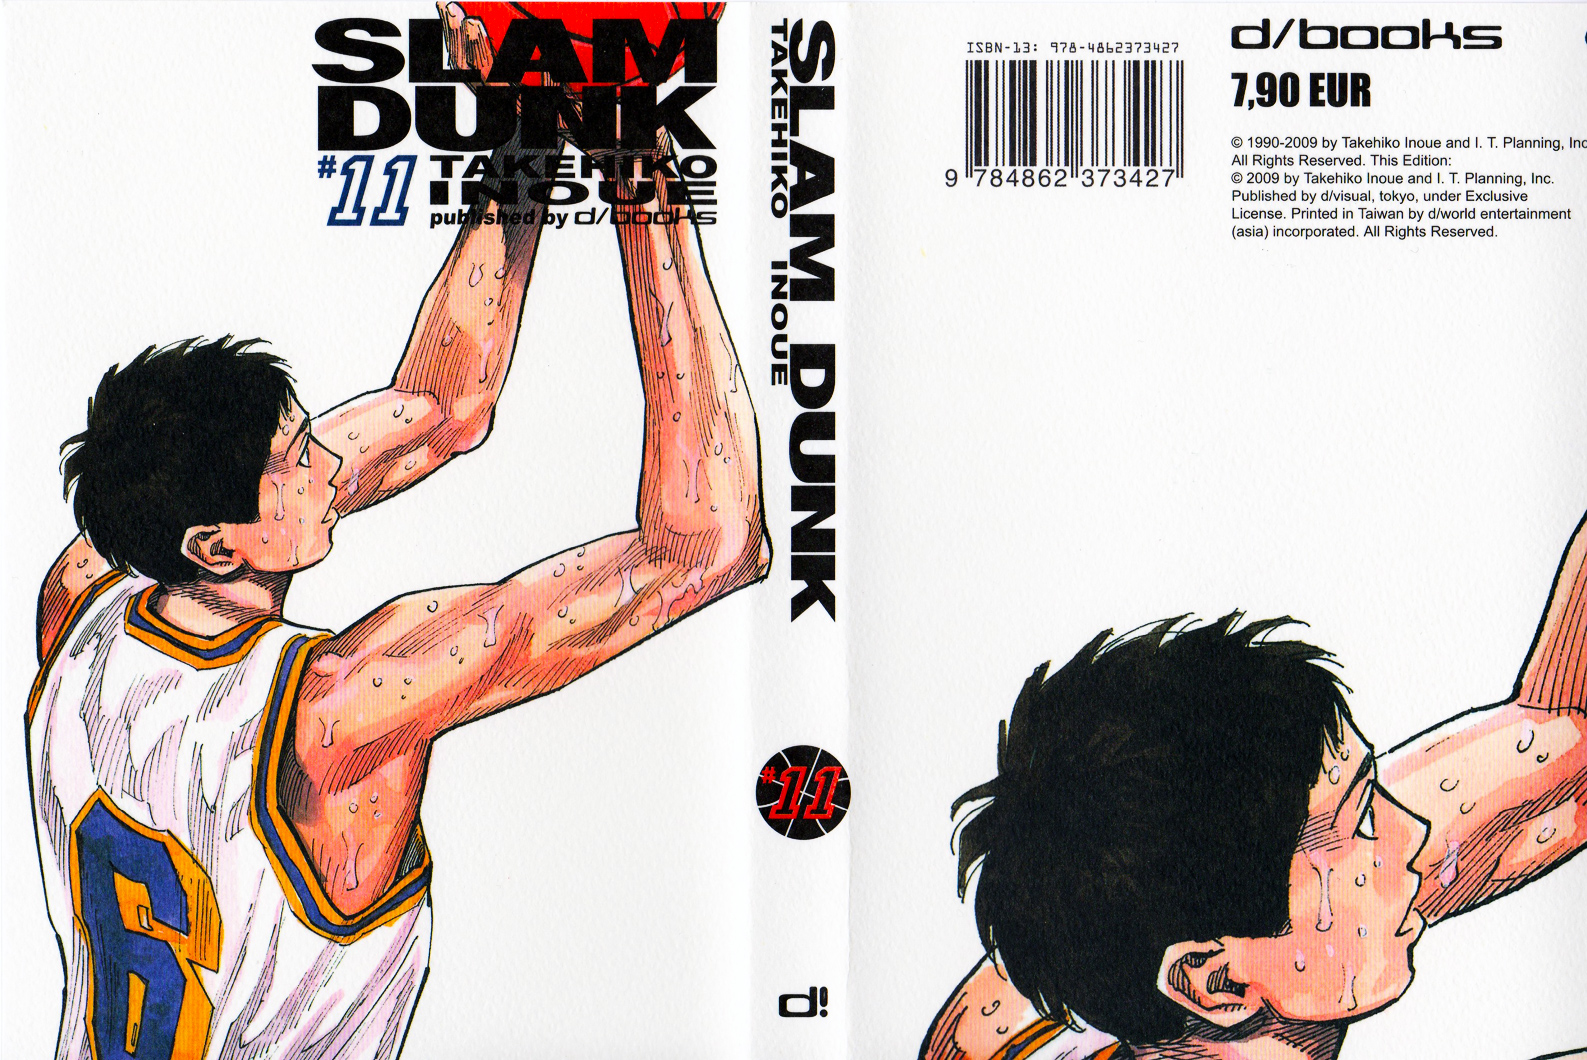 SLAM Cover Gallery